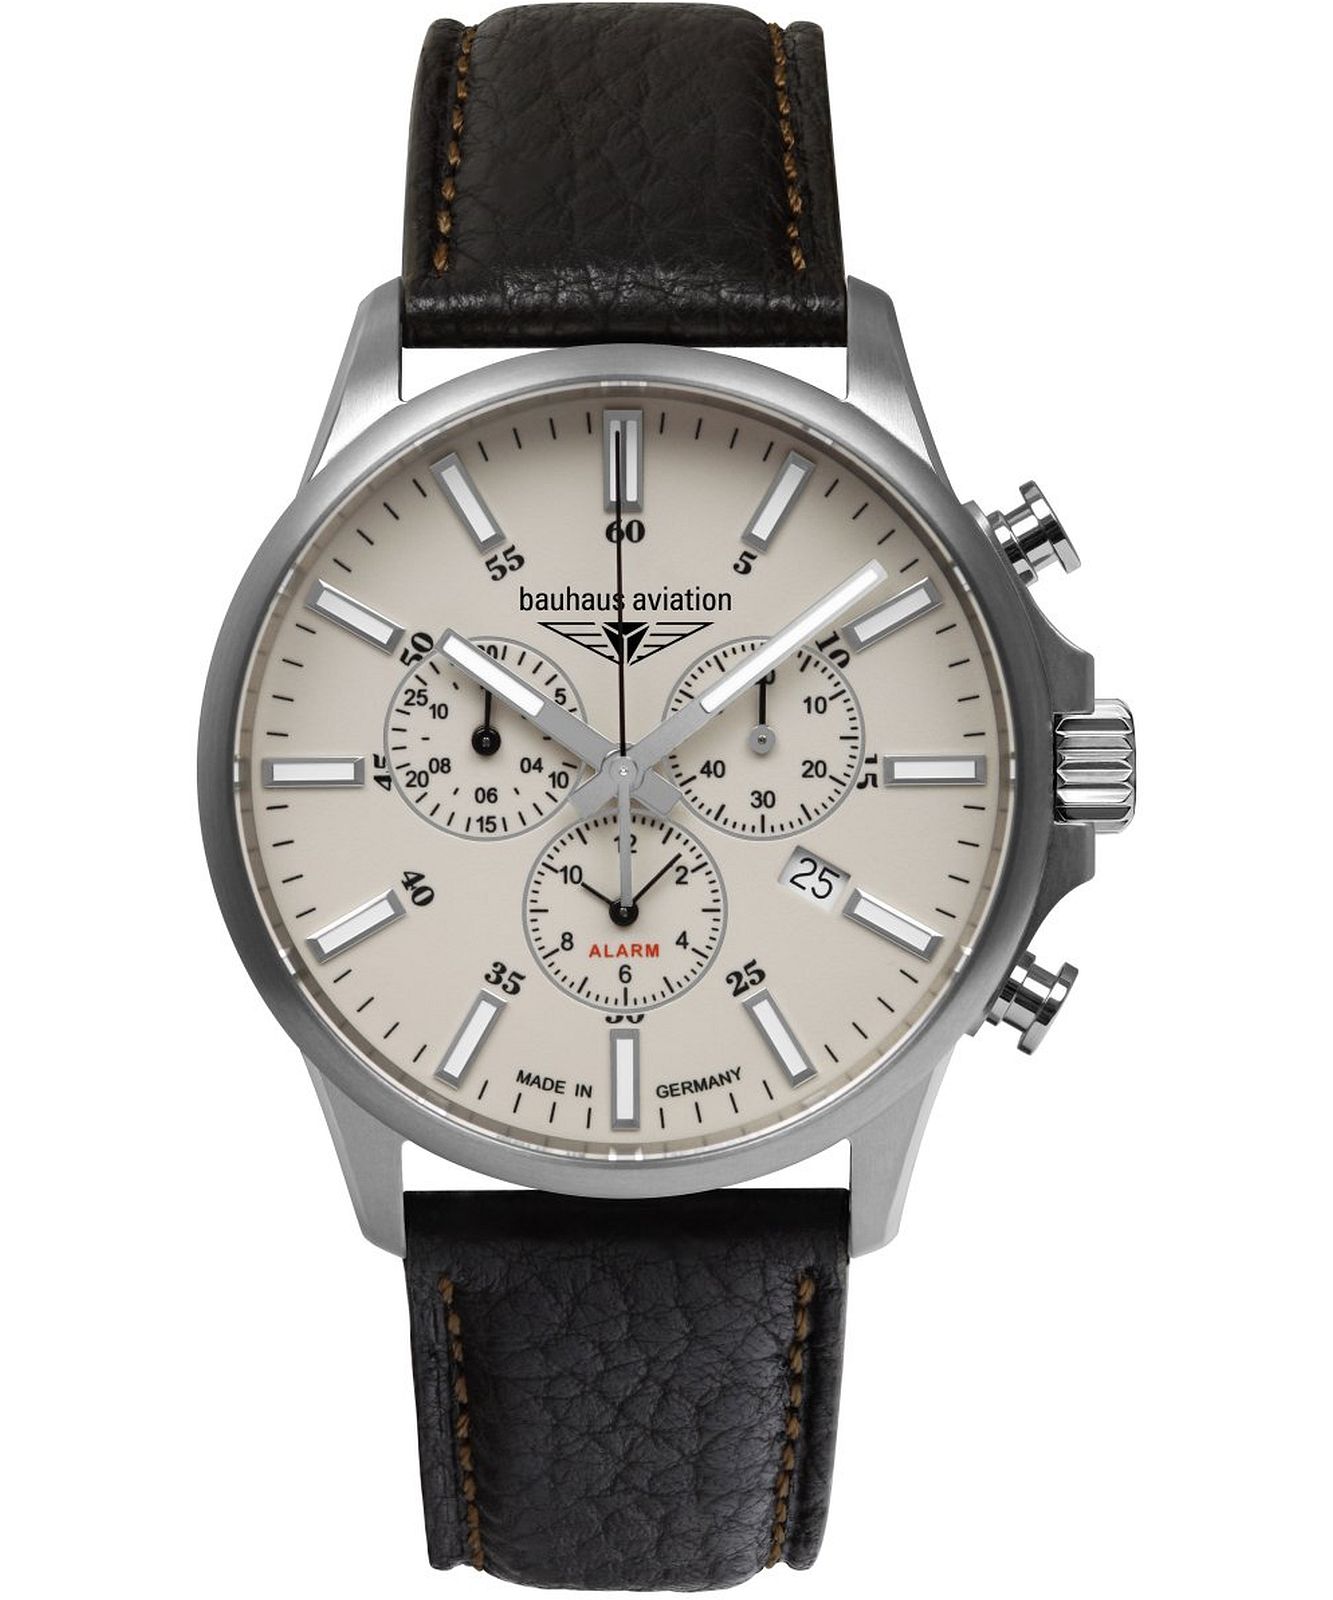 Watch Bauhaus Aviation • - 2880-5 Automatic Chronograph